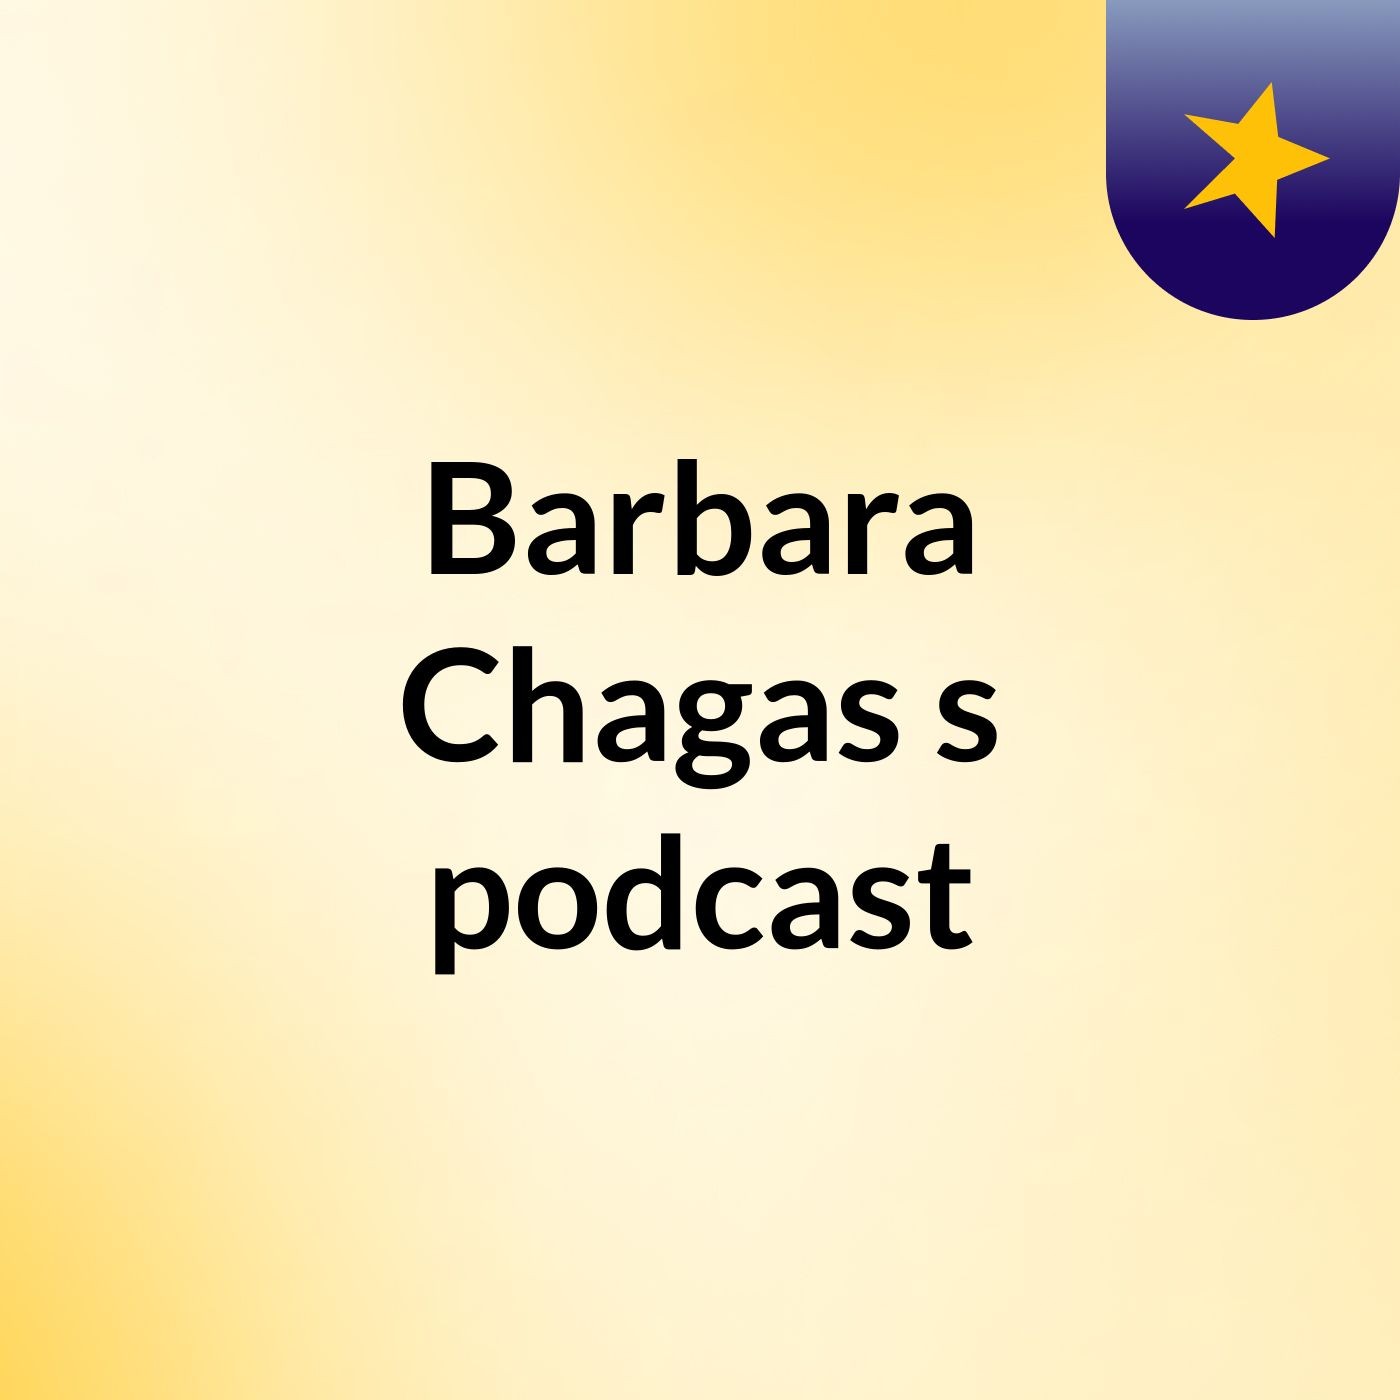 Barbara Chagas's podcast